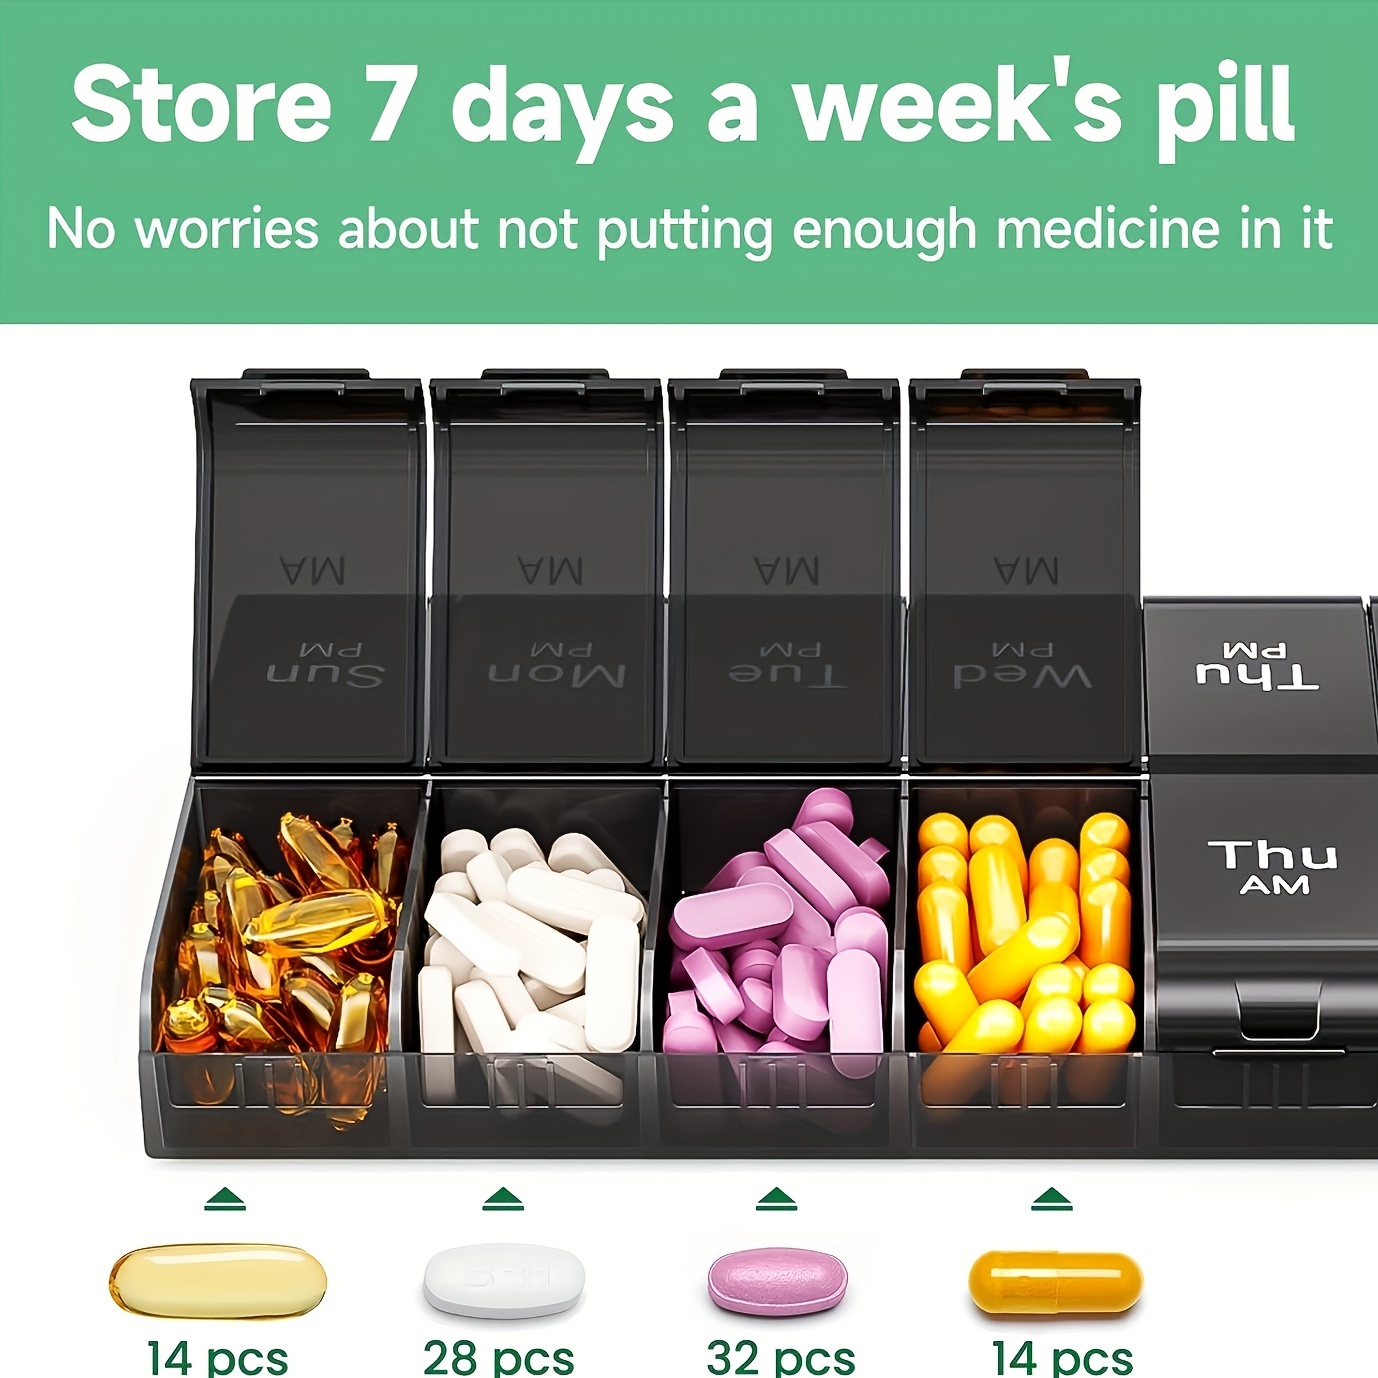  Organizador de pastillas 3 veces al día, pastillero  semanal/diario para 7 días, organizador de medicamentos de 7 días,  pastillero grande 3 veces al día, organizador de pastillas de viaje, para  guardar 